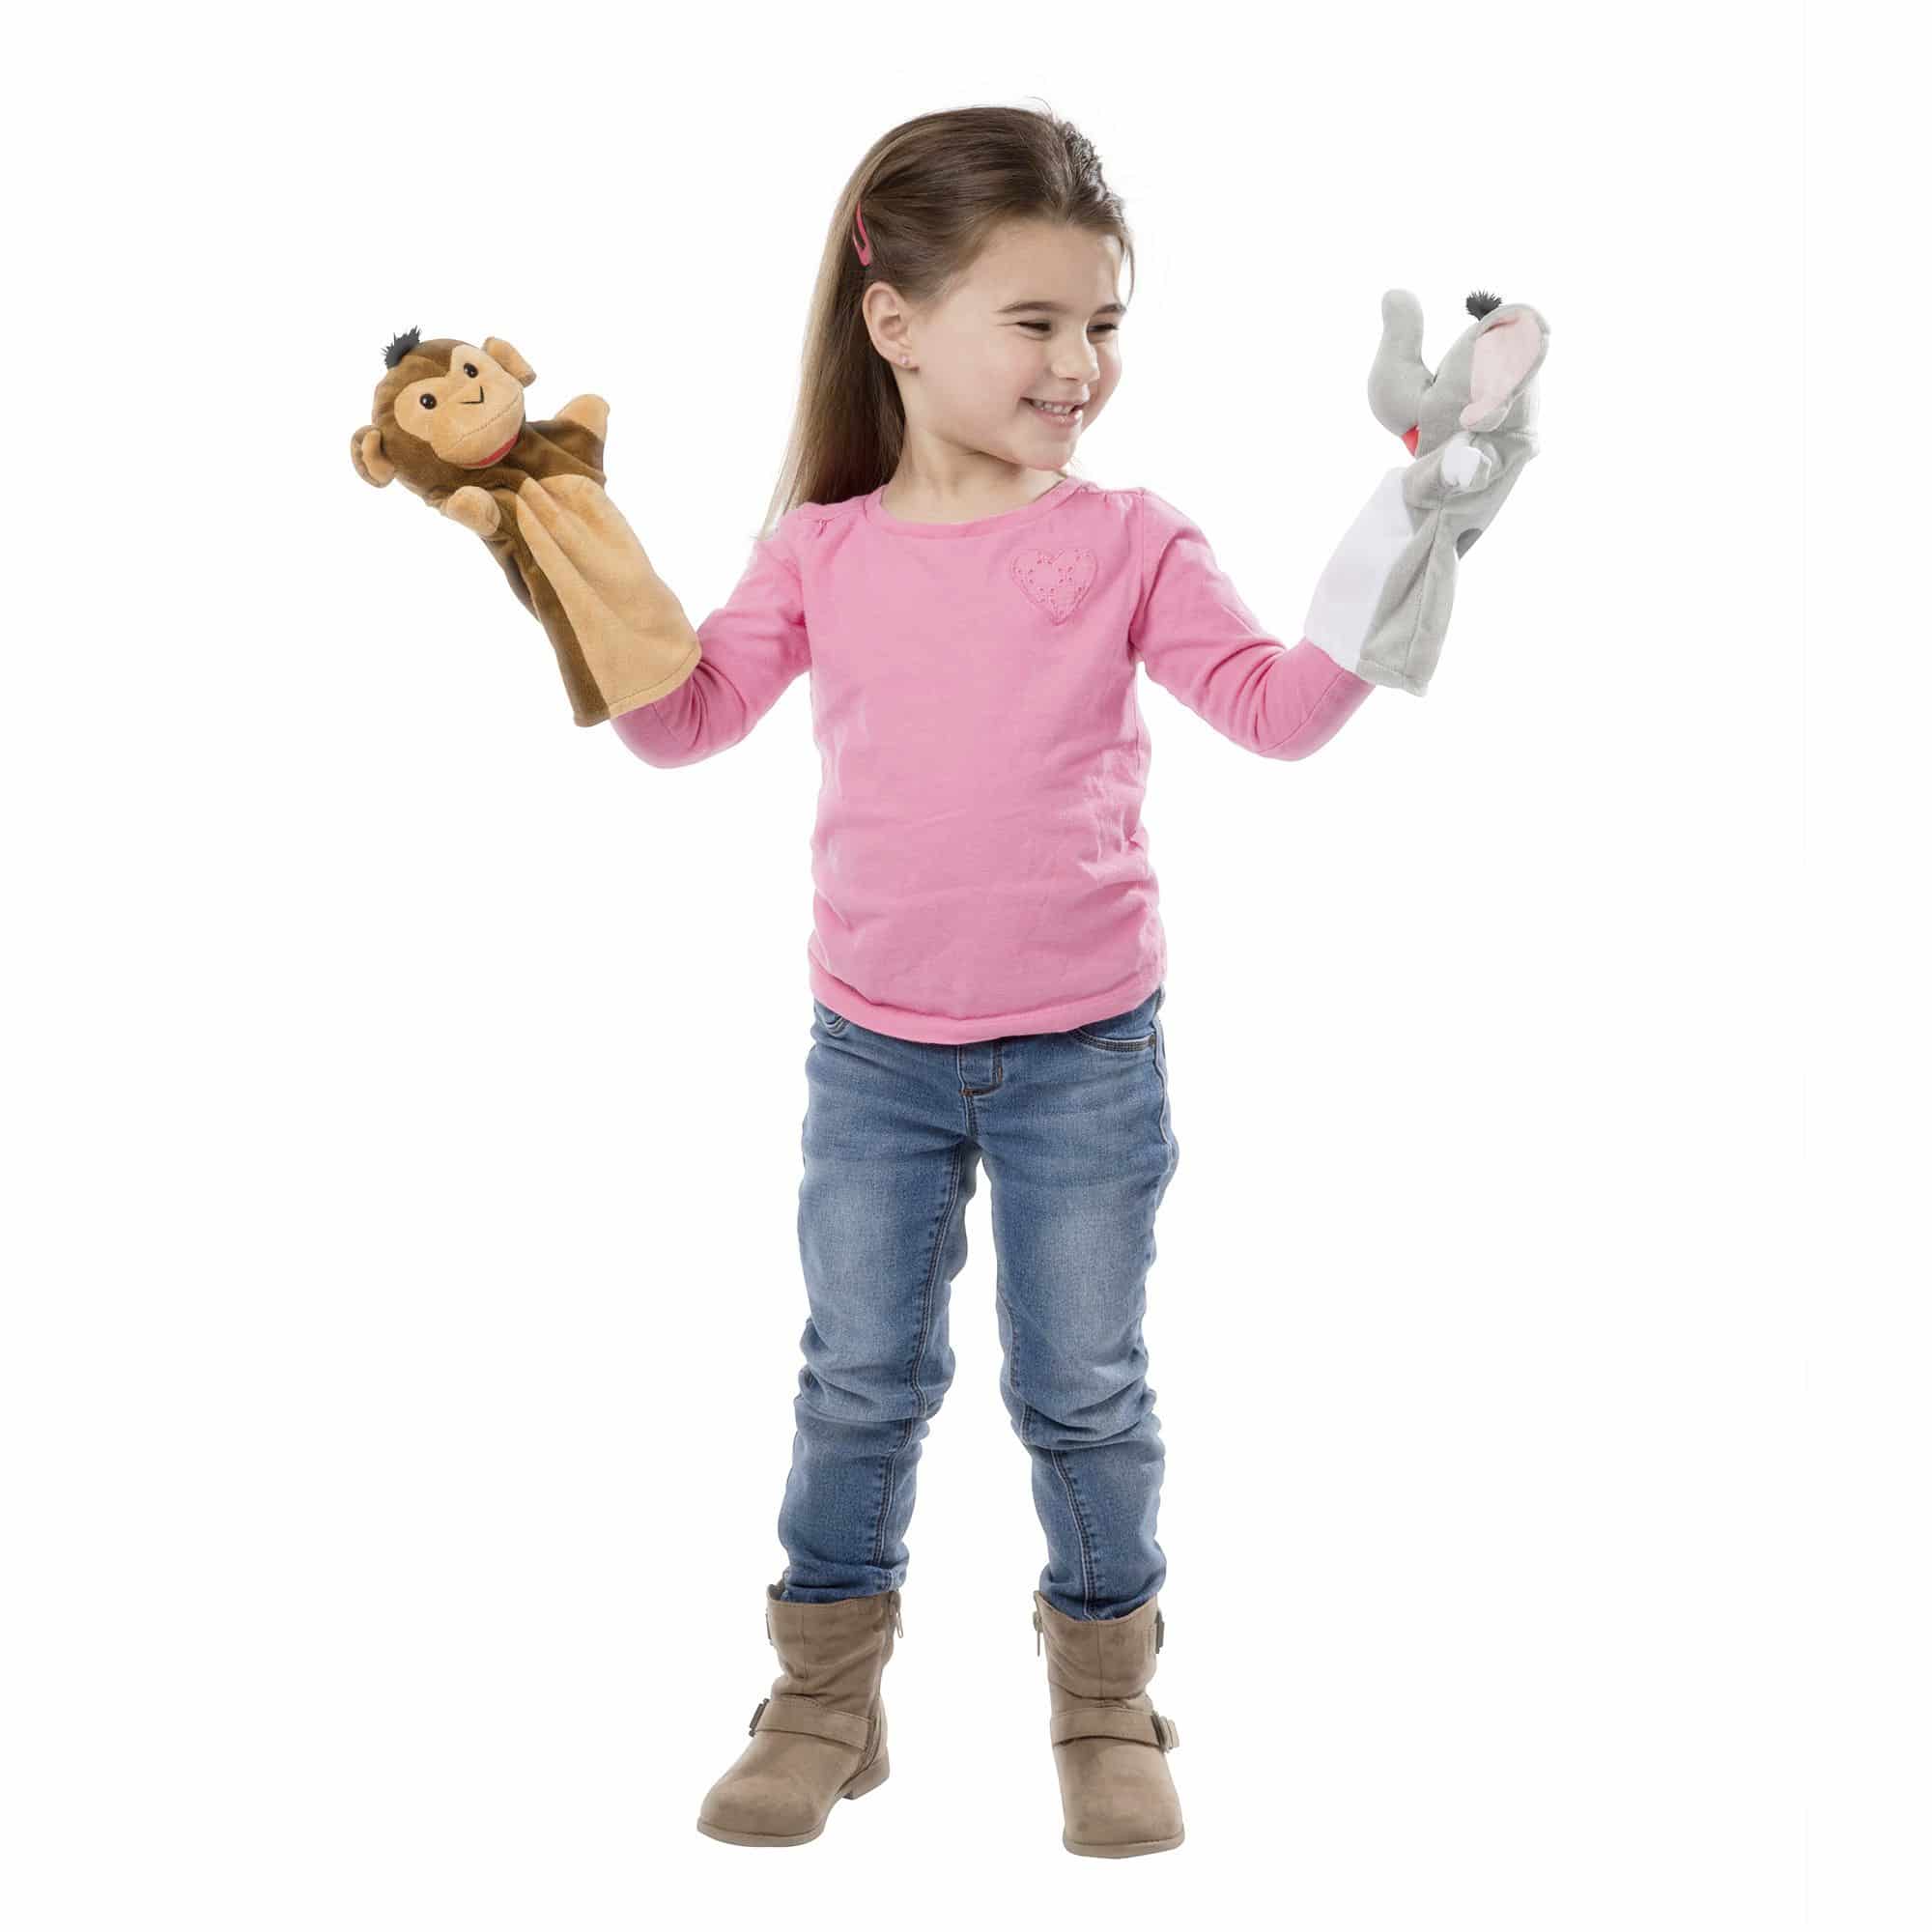 Melissa & Doug - Zoo Friends Hand Puppets